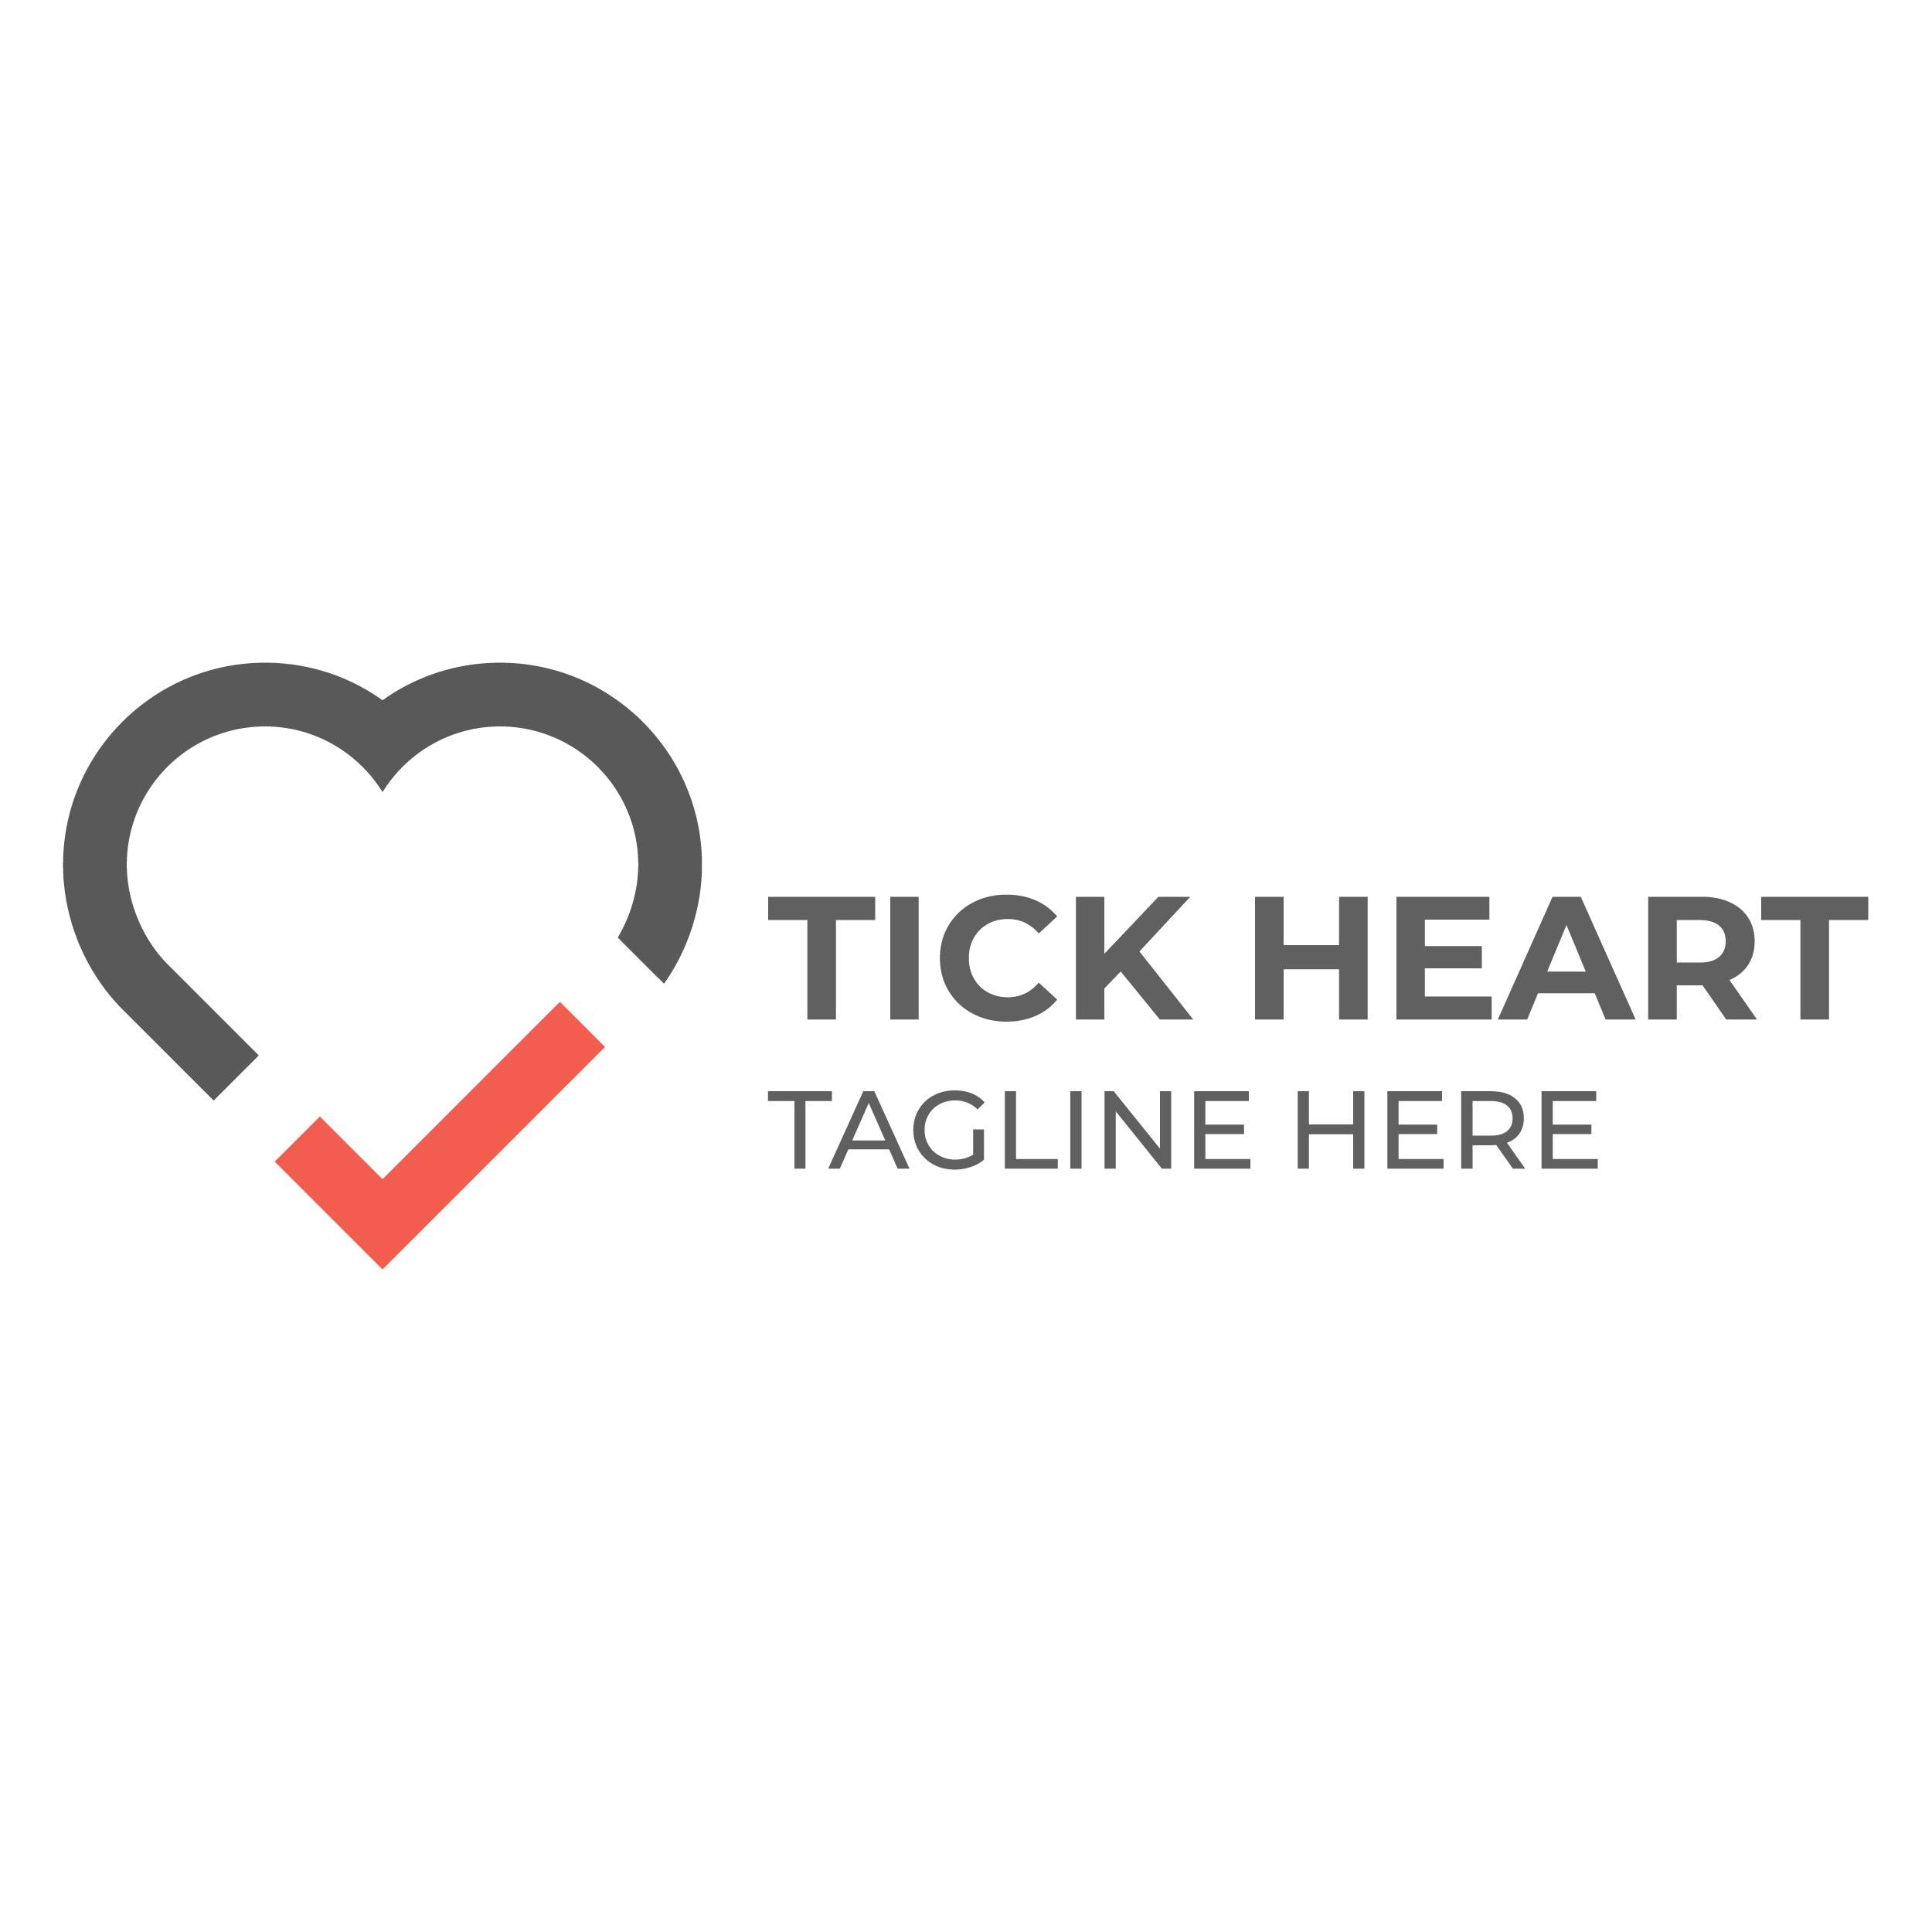 Heart health check logo with true mark sign